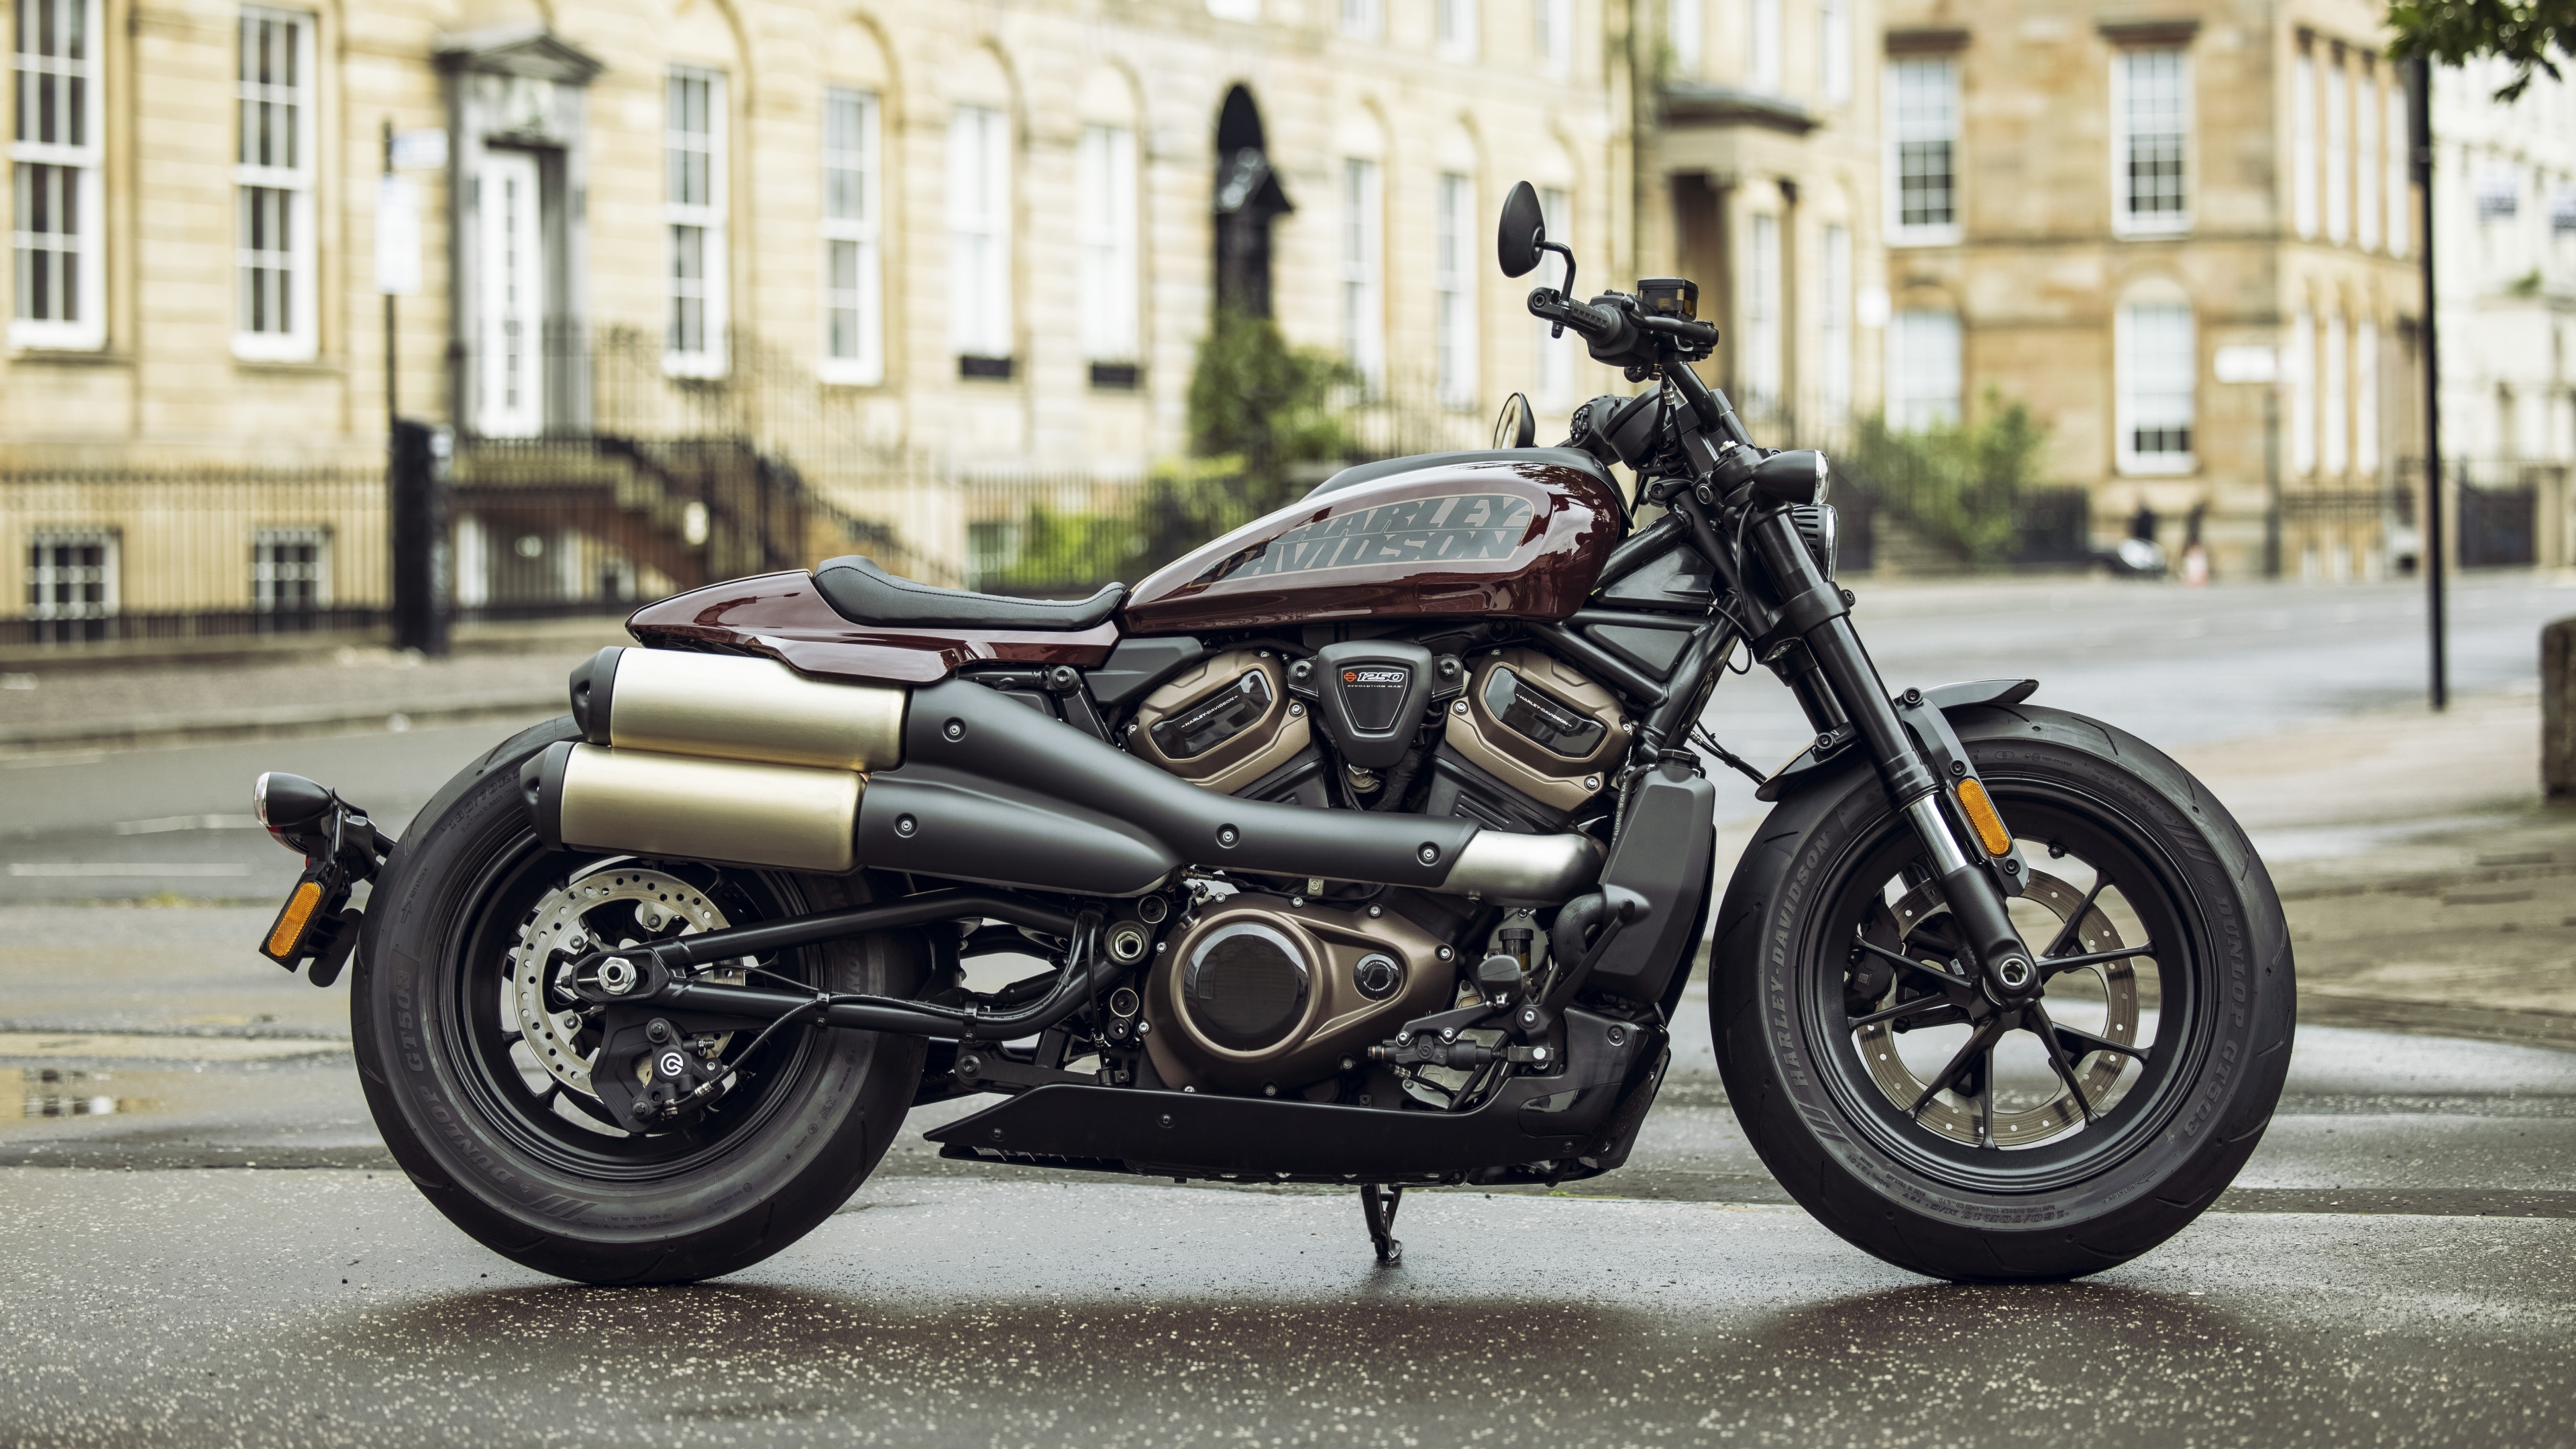 Harley-Davidson Bikes, Sportster S power, Ultimate cruiser, 2021 motorcycle models, 3840x2160 4K Desktop